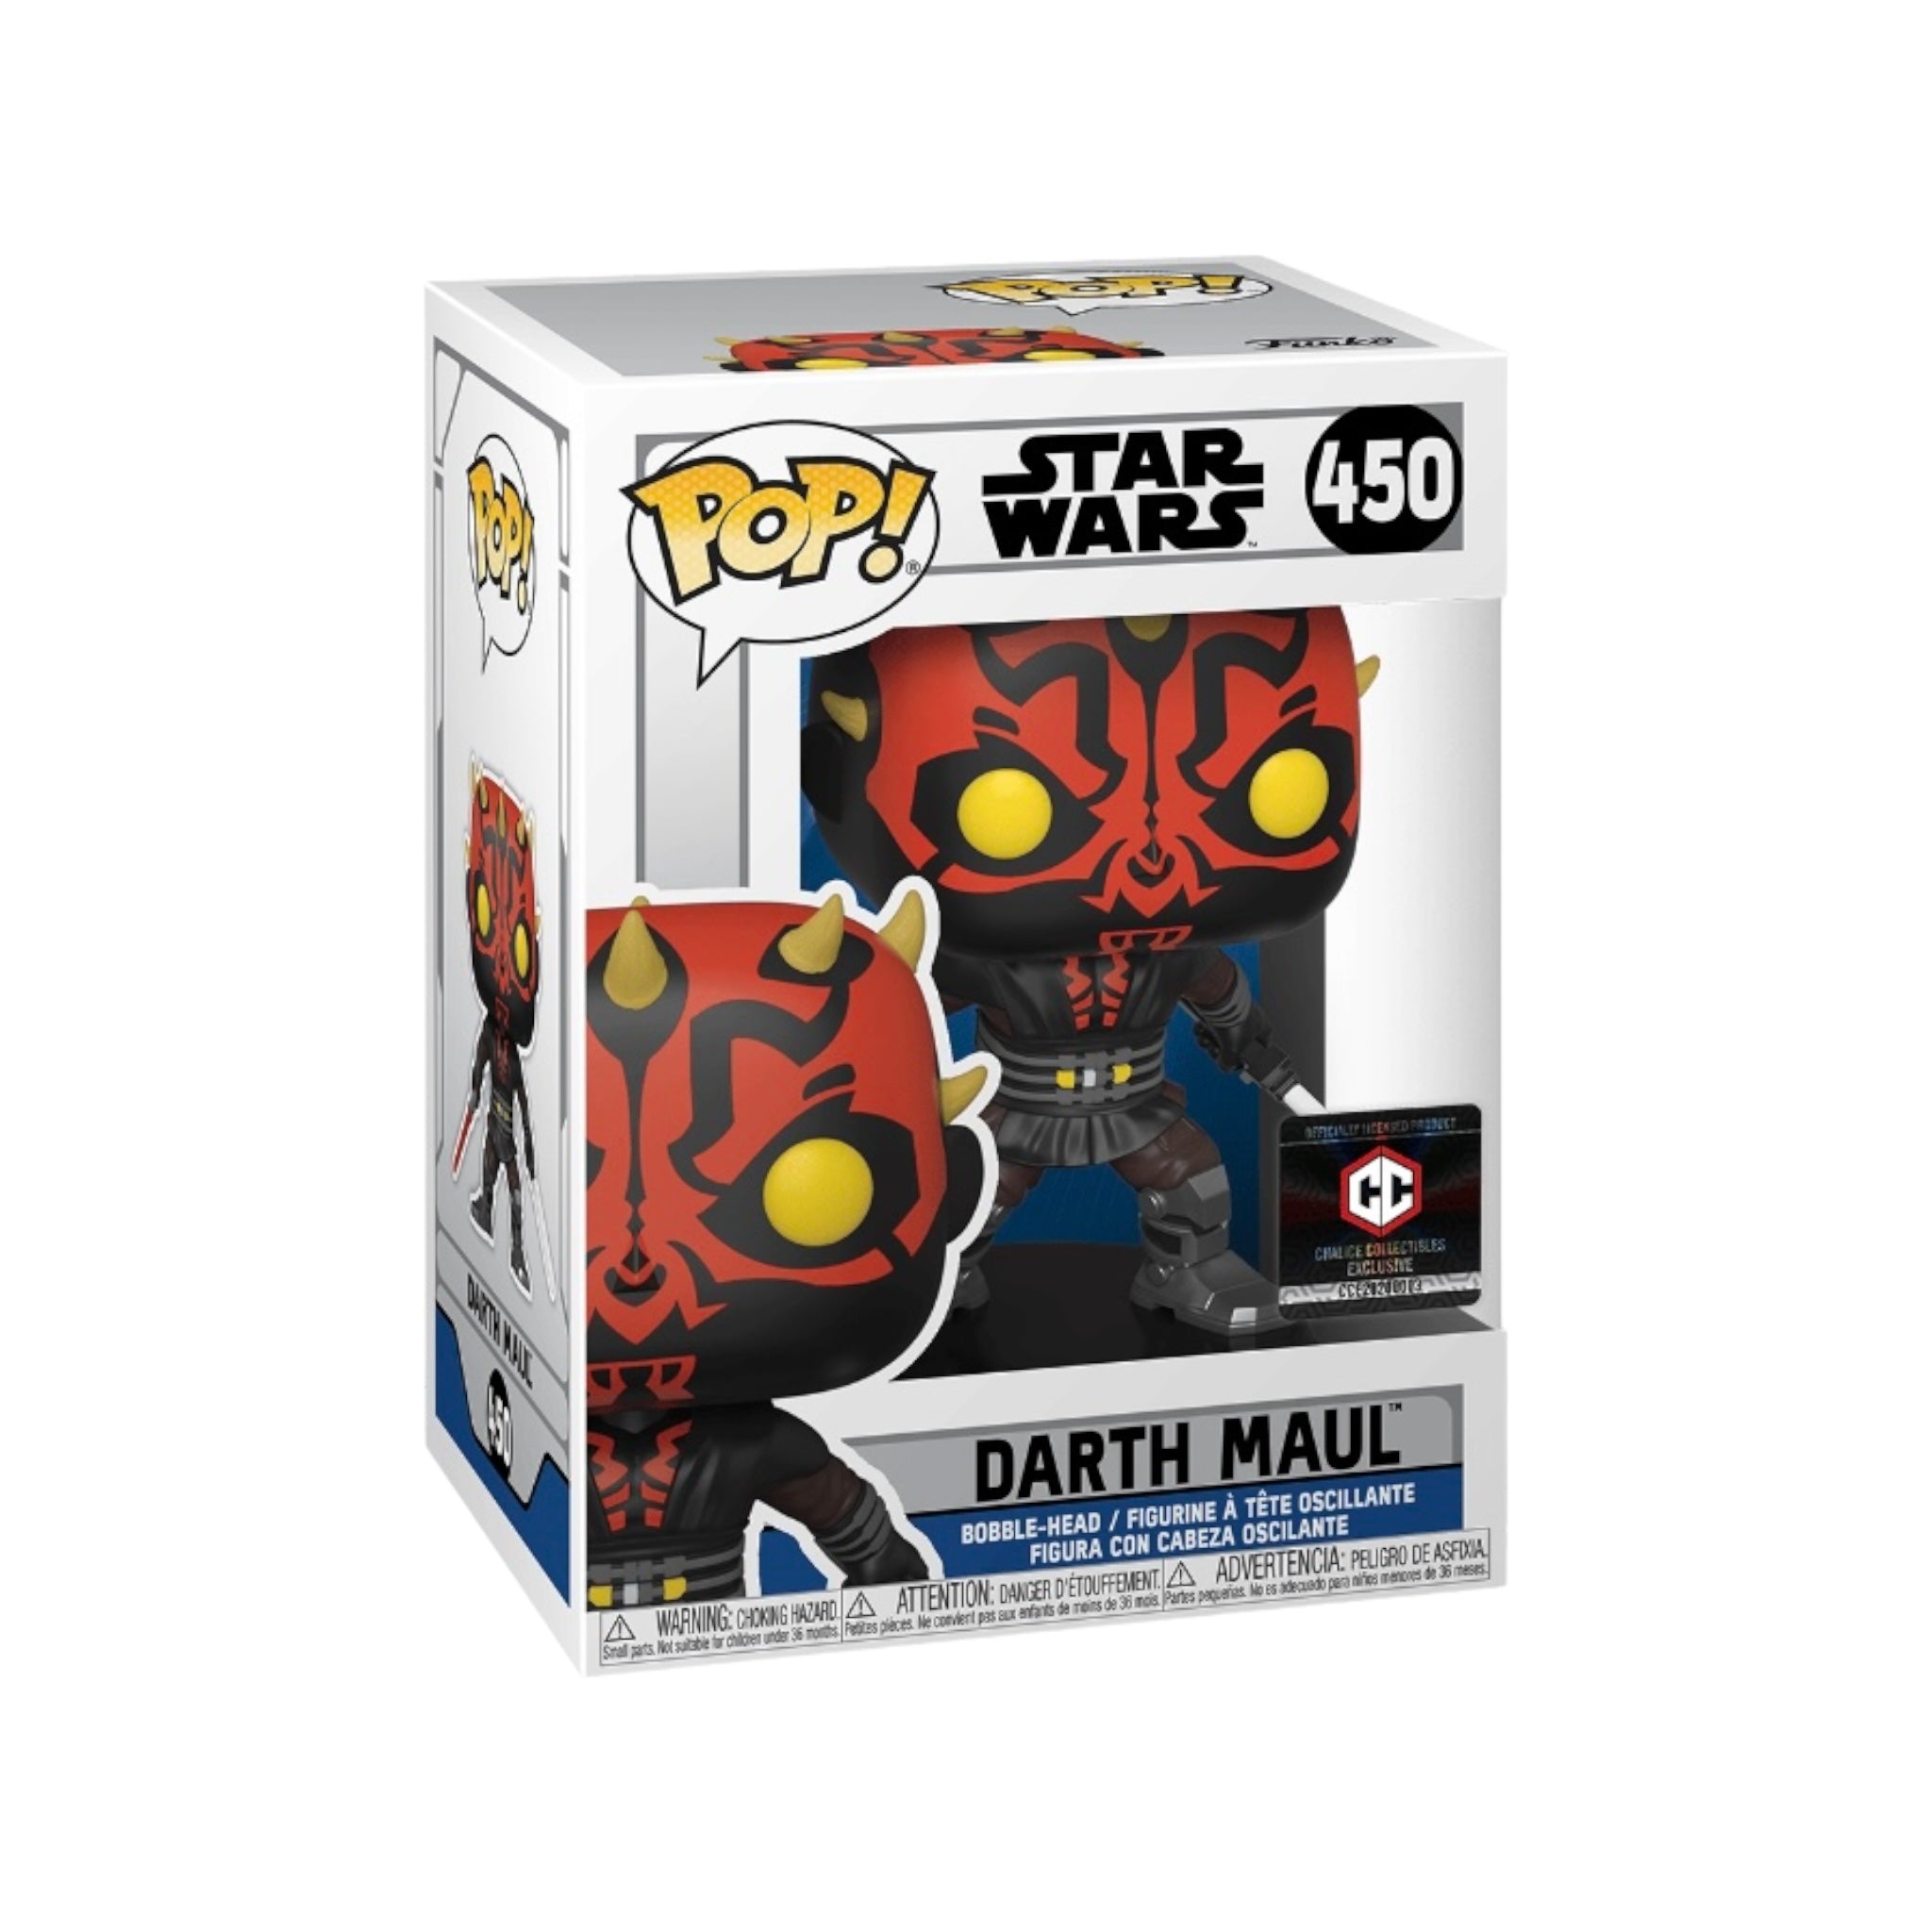 Darth Maul #450 (w/ Darksaber) Funko Pop! - Star Wars: The Clone Wars - Chalice Collectibles Exclusive